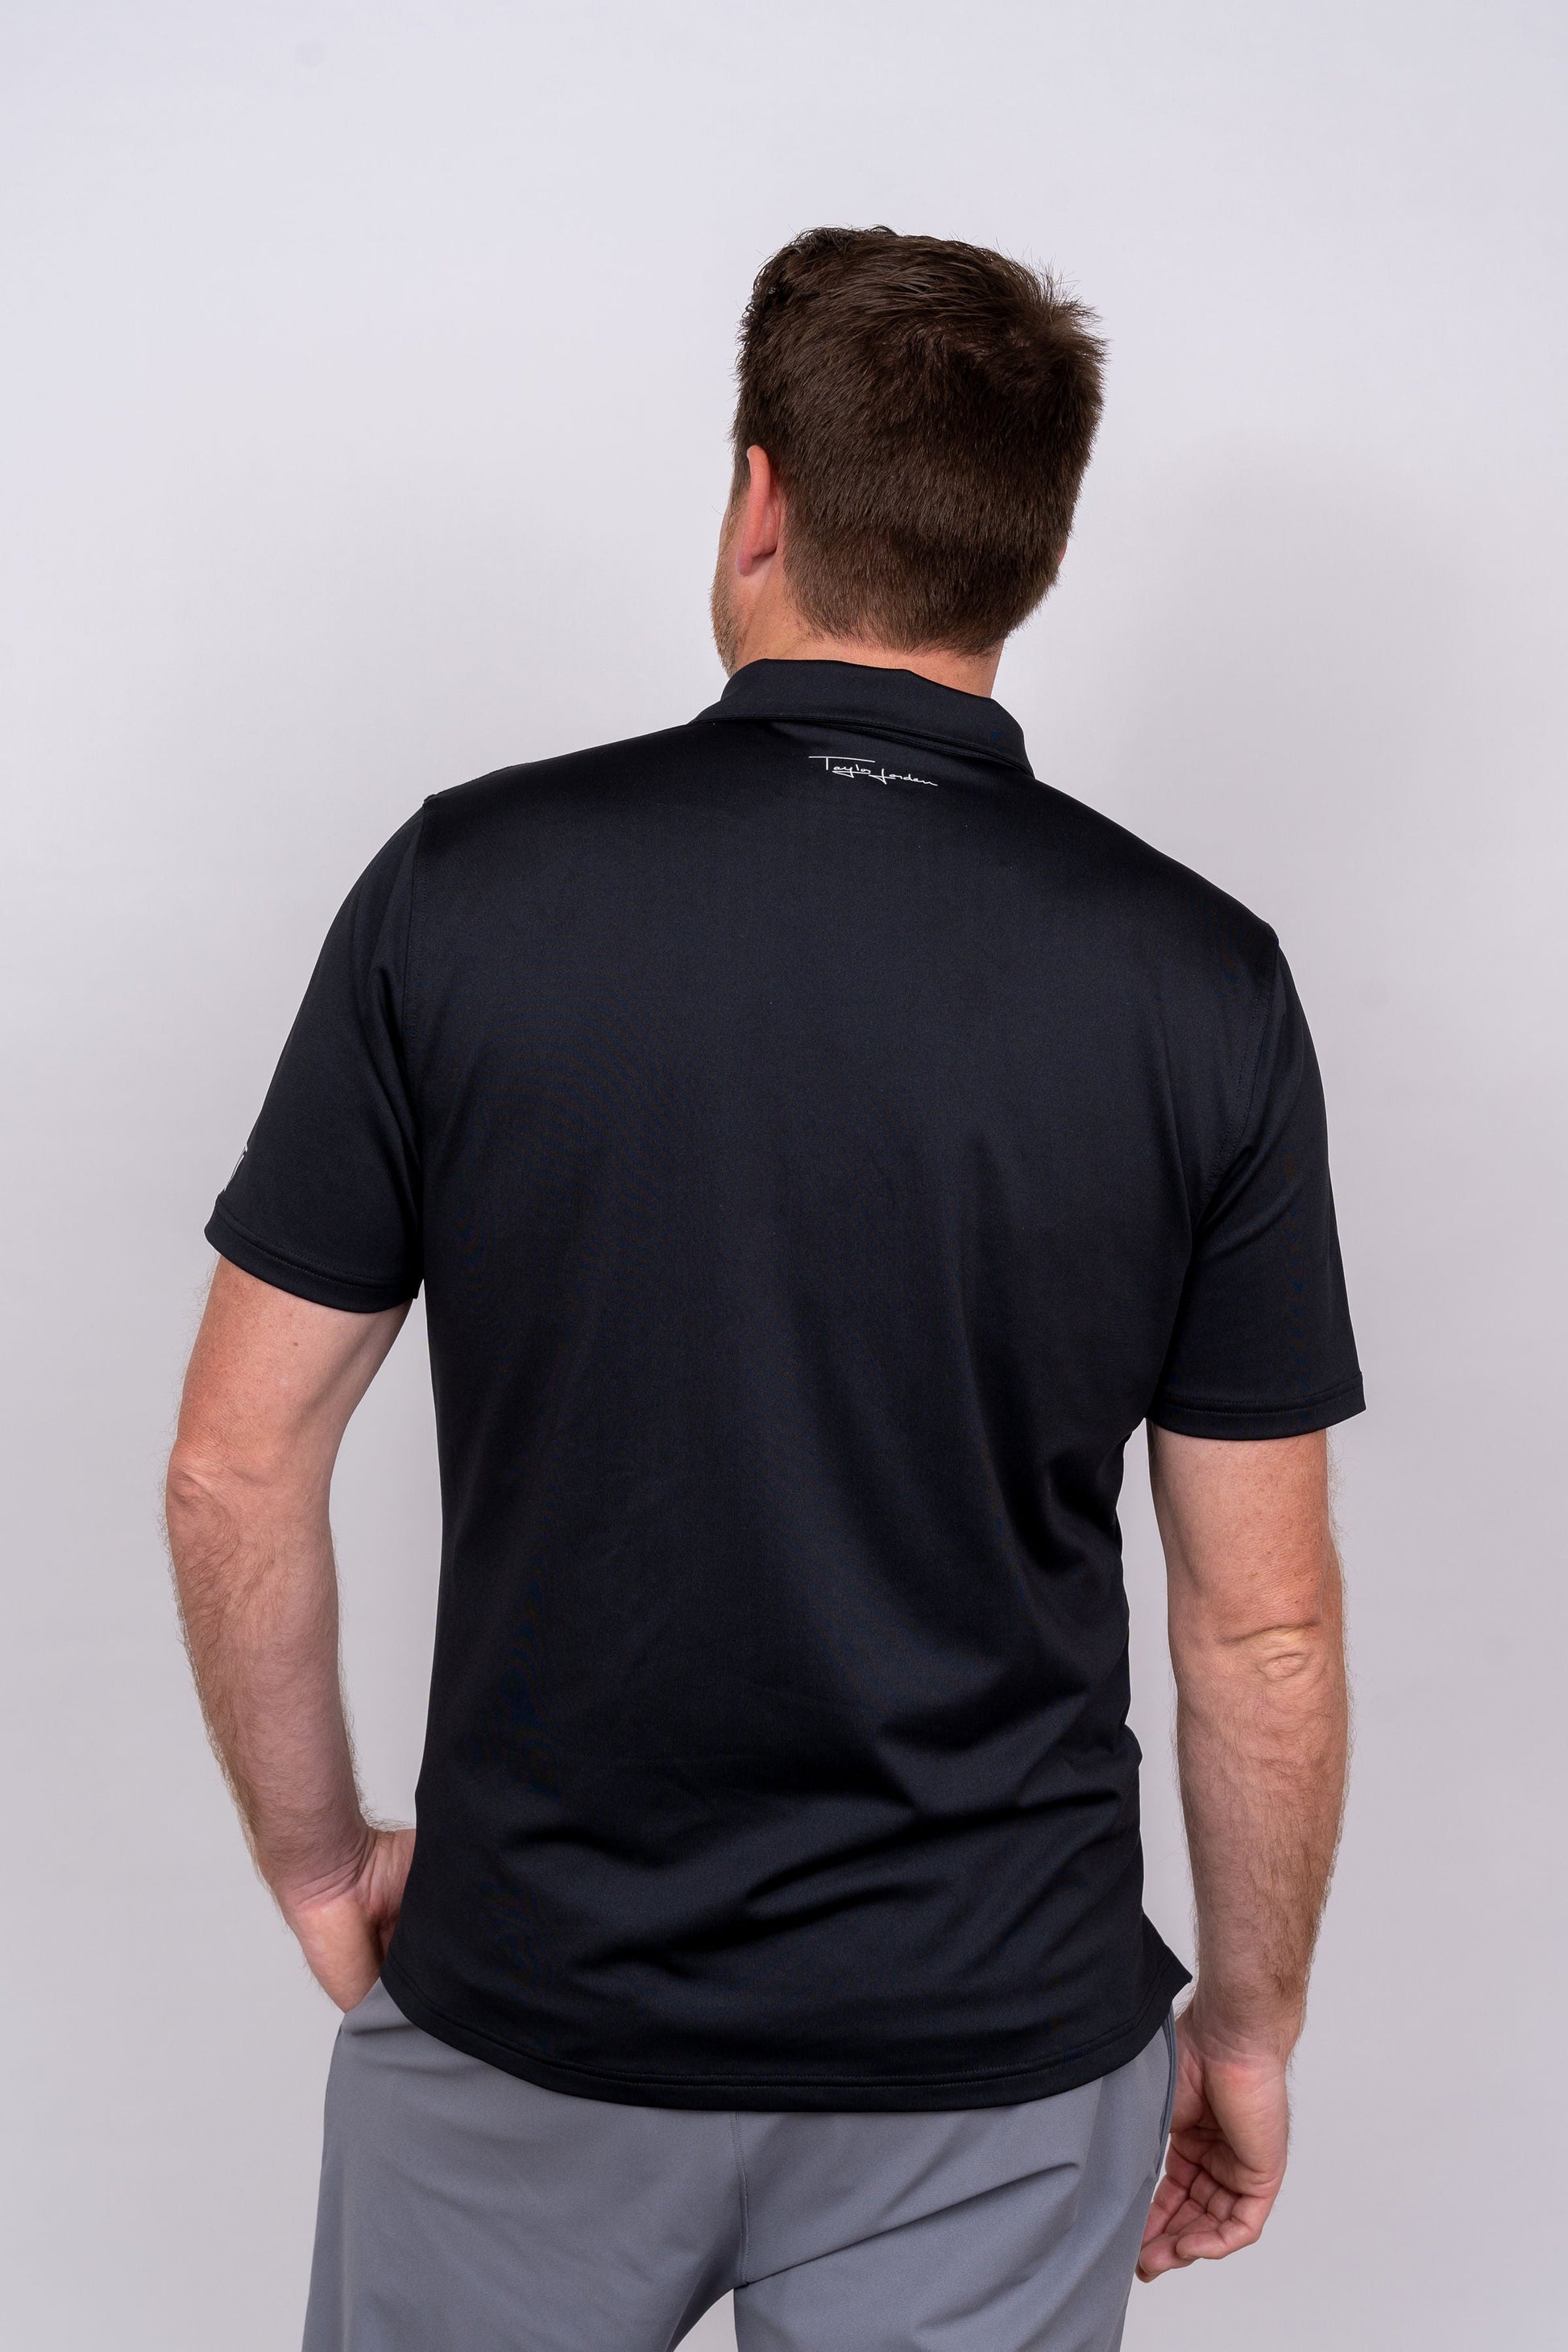 TJ Golf Shirt 2.0 - Black Men's Golf Shirt Taylor Jordan Apparel 